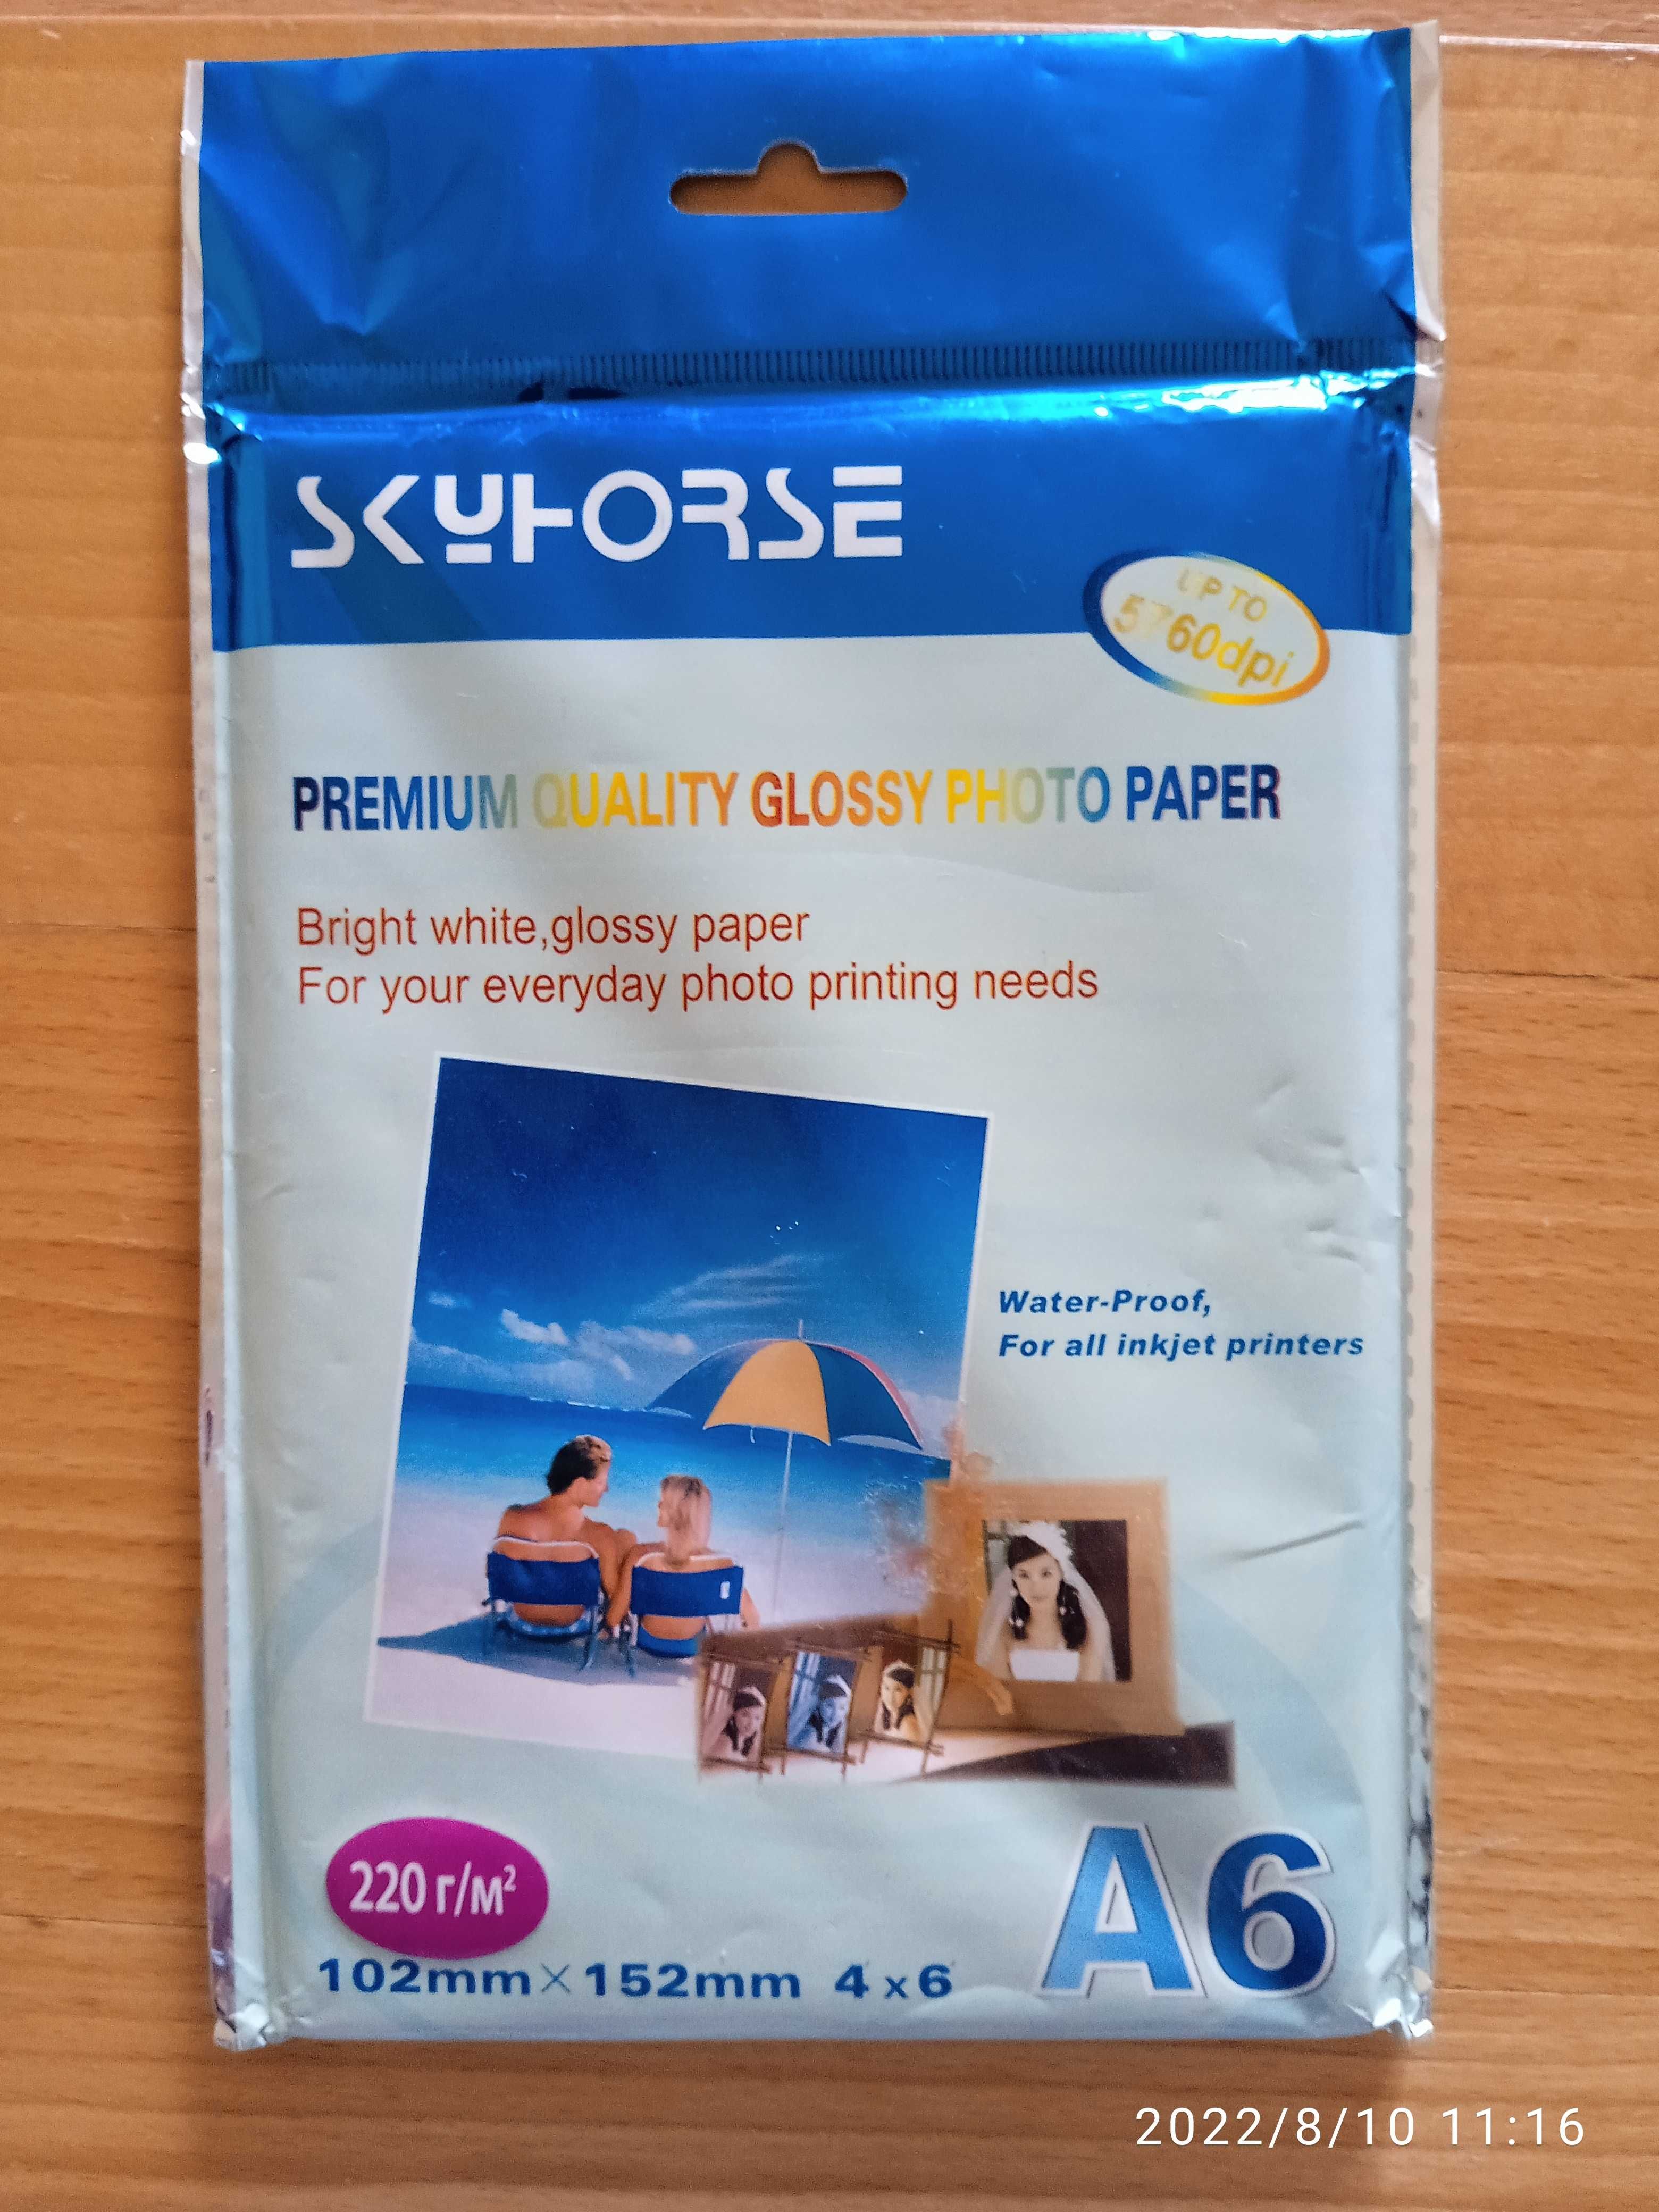 Фотопапір Premium Cuality Glossy Photo Paper